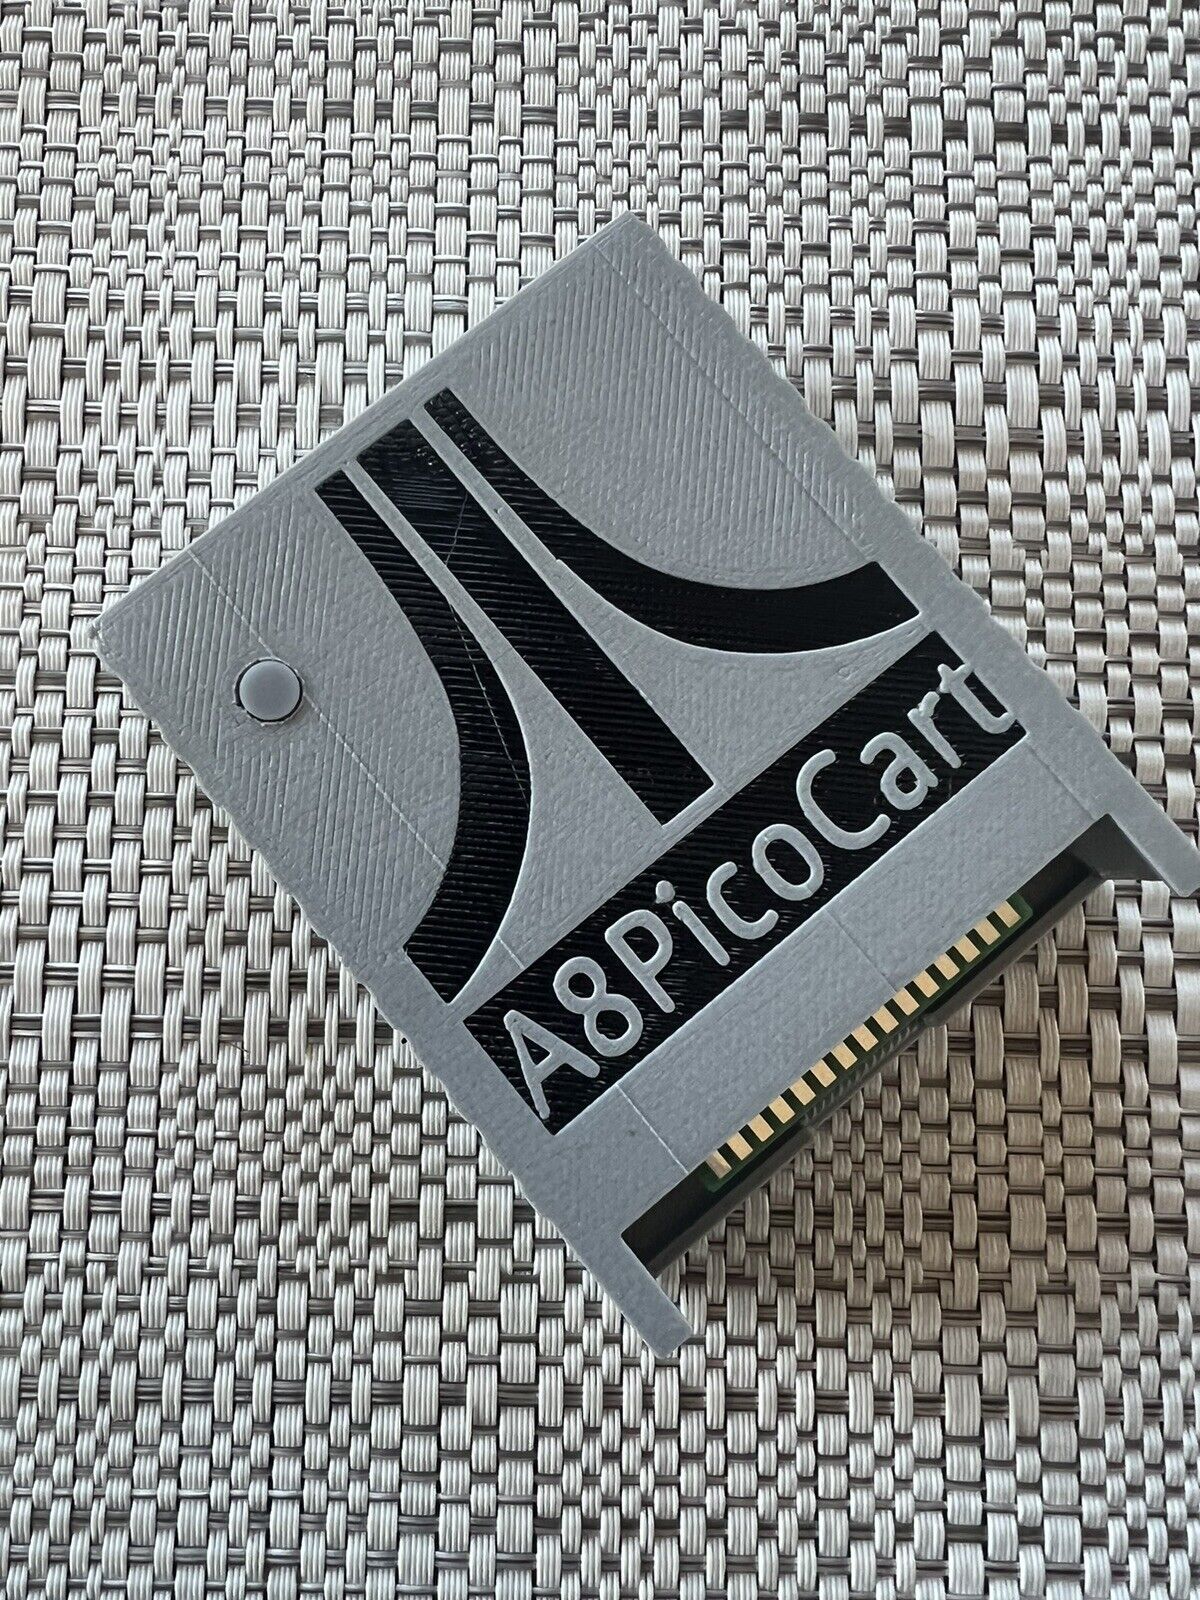 A8picoCart Atari 130 / 65 XE 800 / 1200 XL XEGS multicart UnoCart clone game